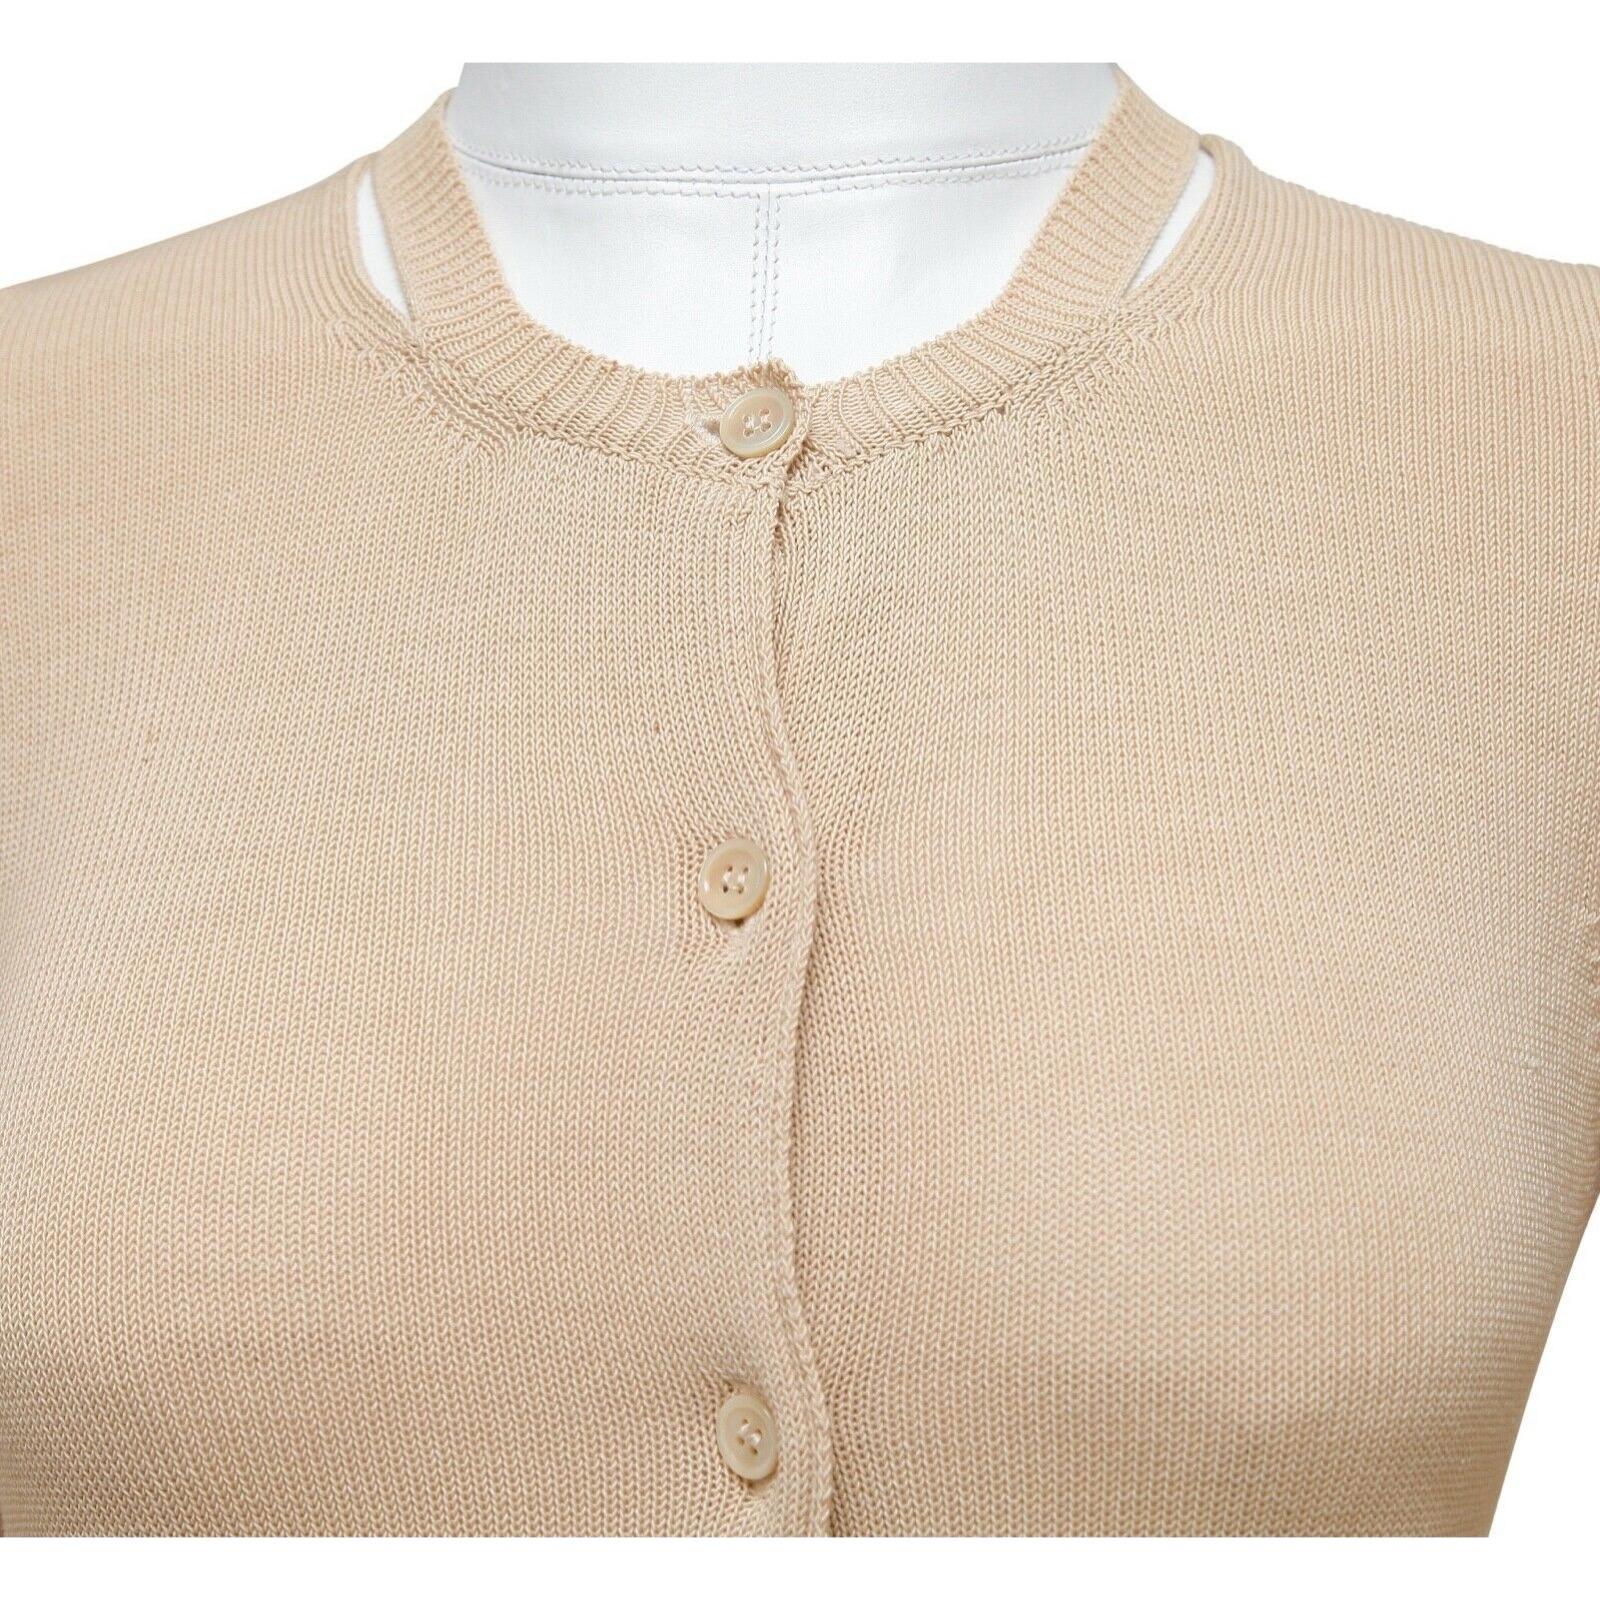 Women's MARNI Beige Sweater Cardigan Knit Top Crewneck Long Sleeve Buttons Sz 38